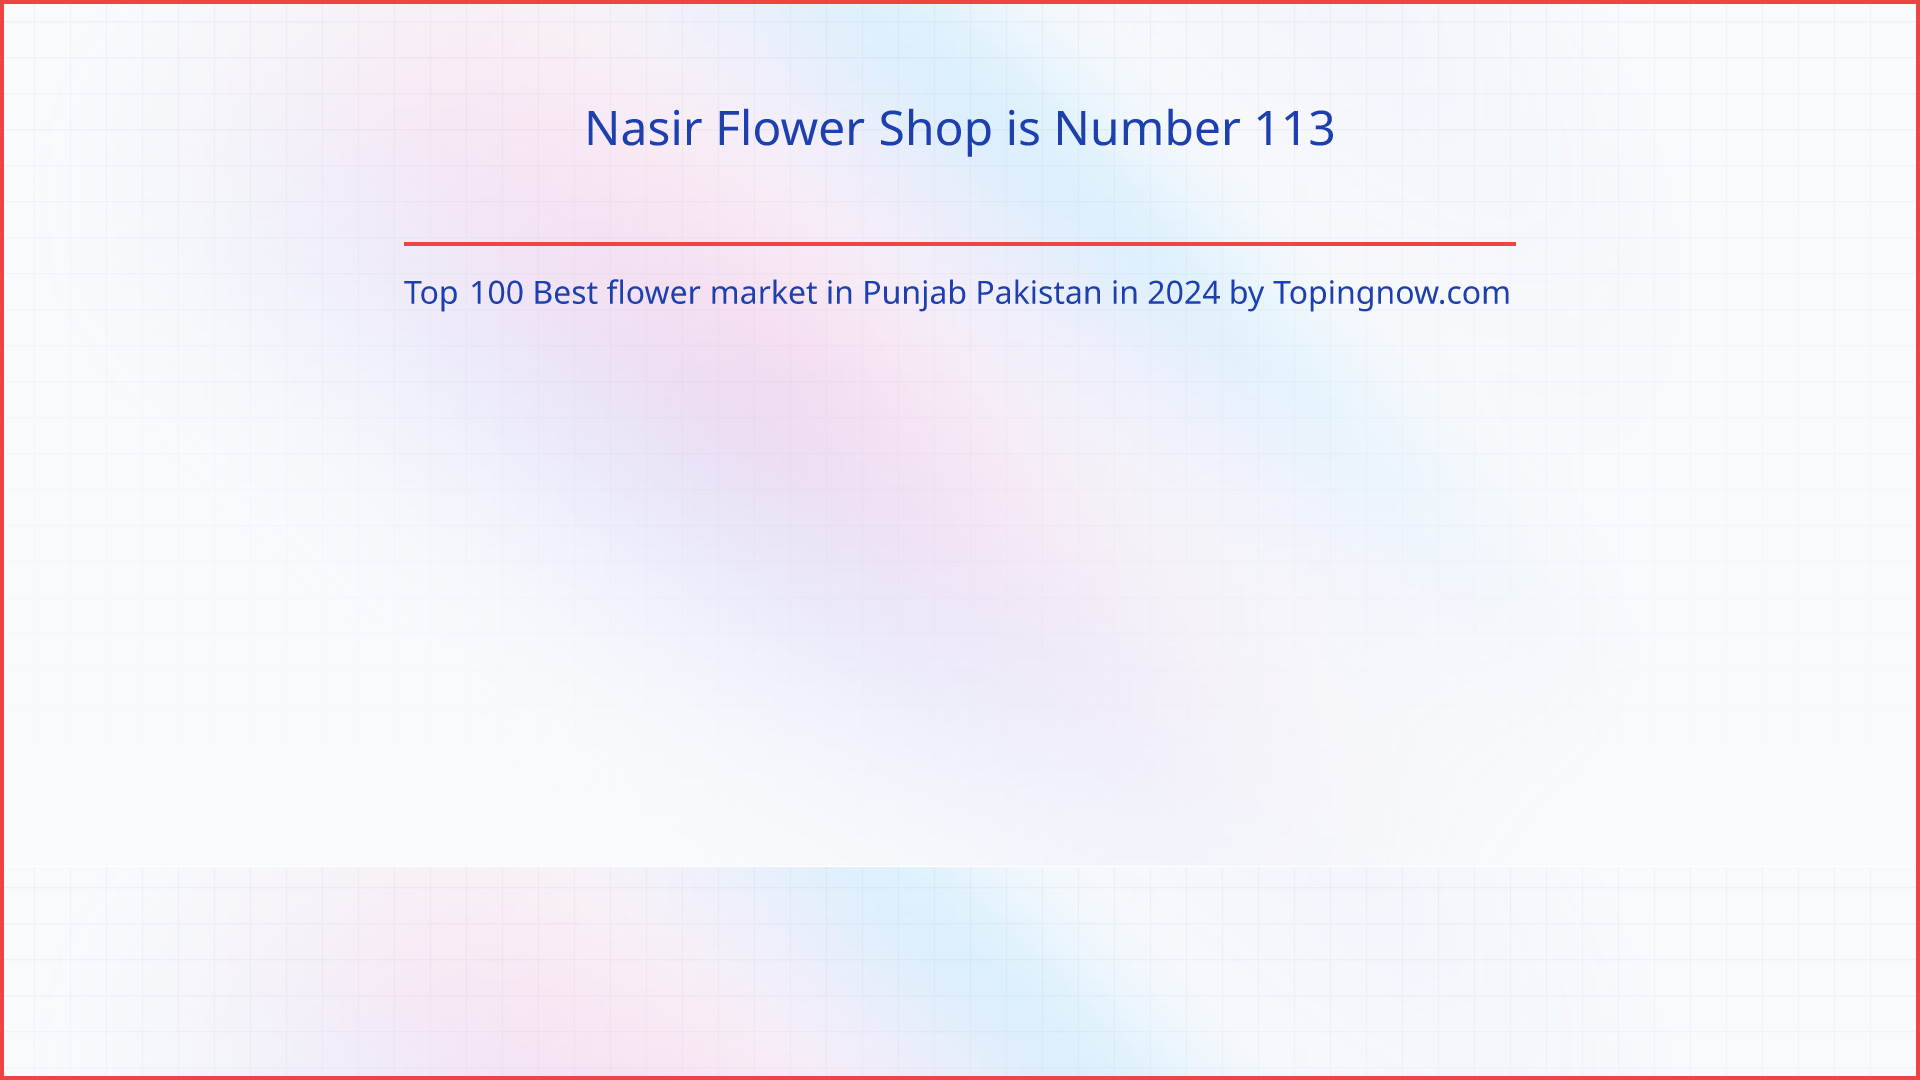 Nasir Flower Shop: Top 100 Best flower market in Punjab Pakistan in 2024